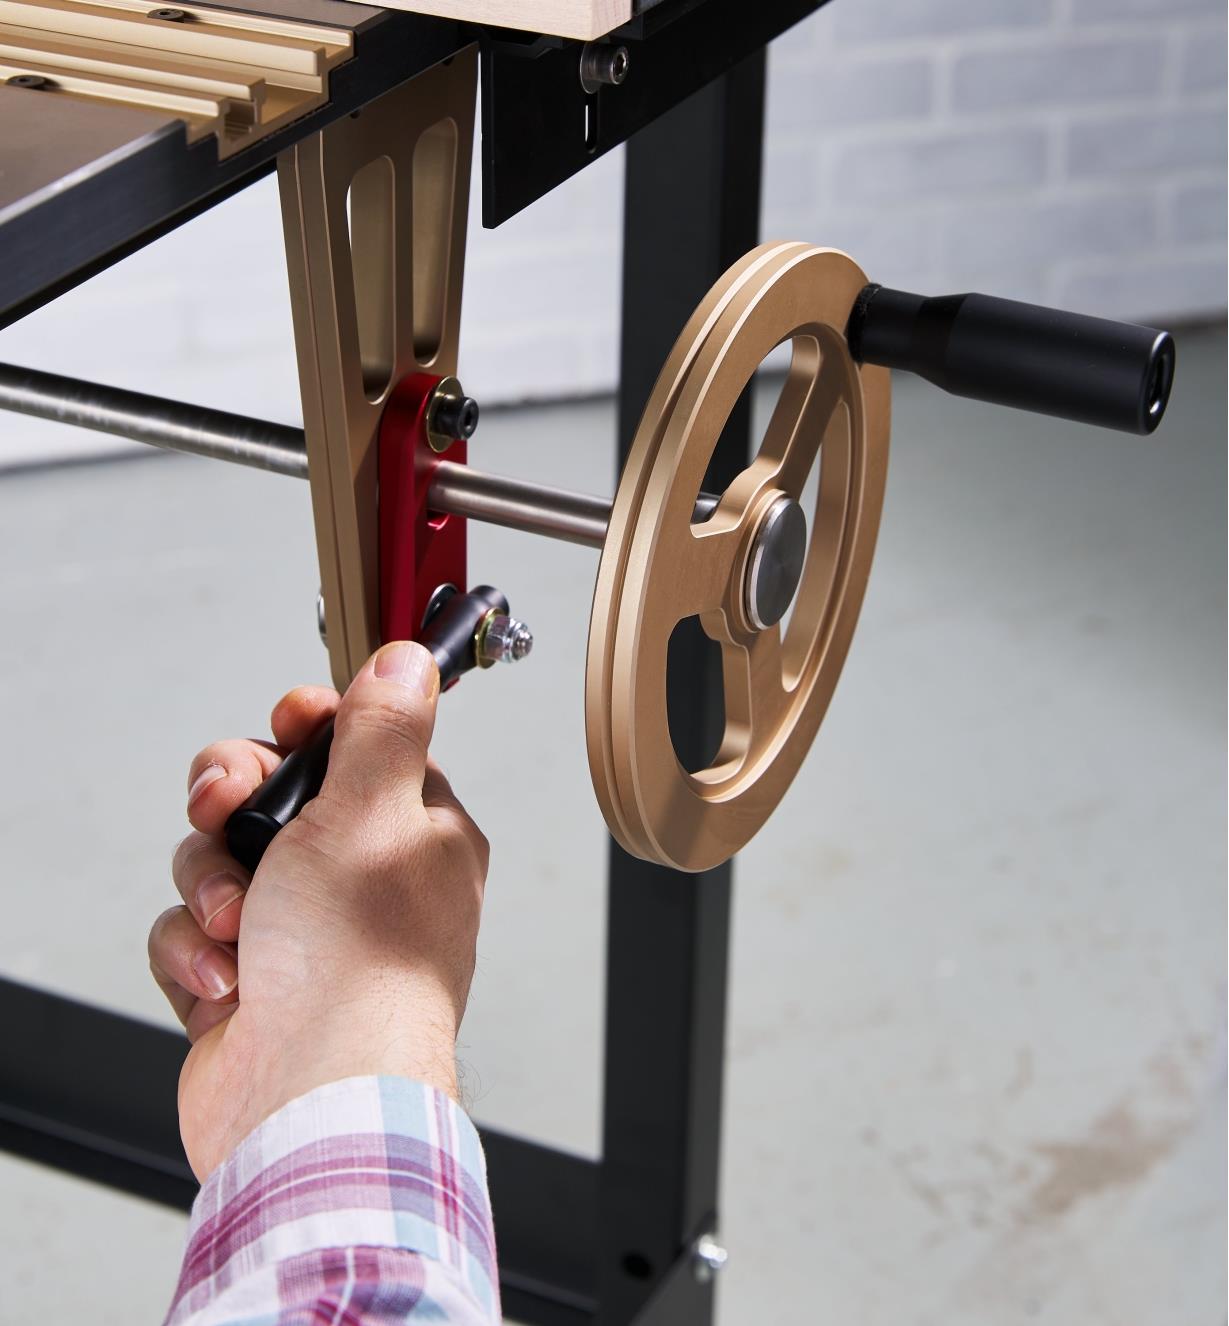 Turning the lever lock on the handwheel